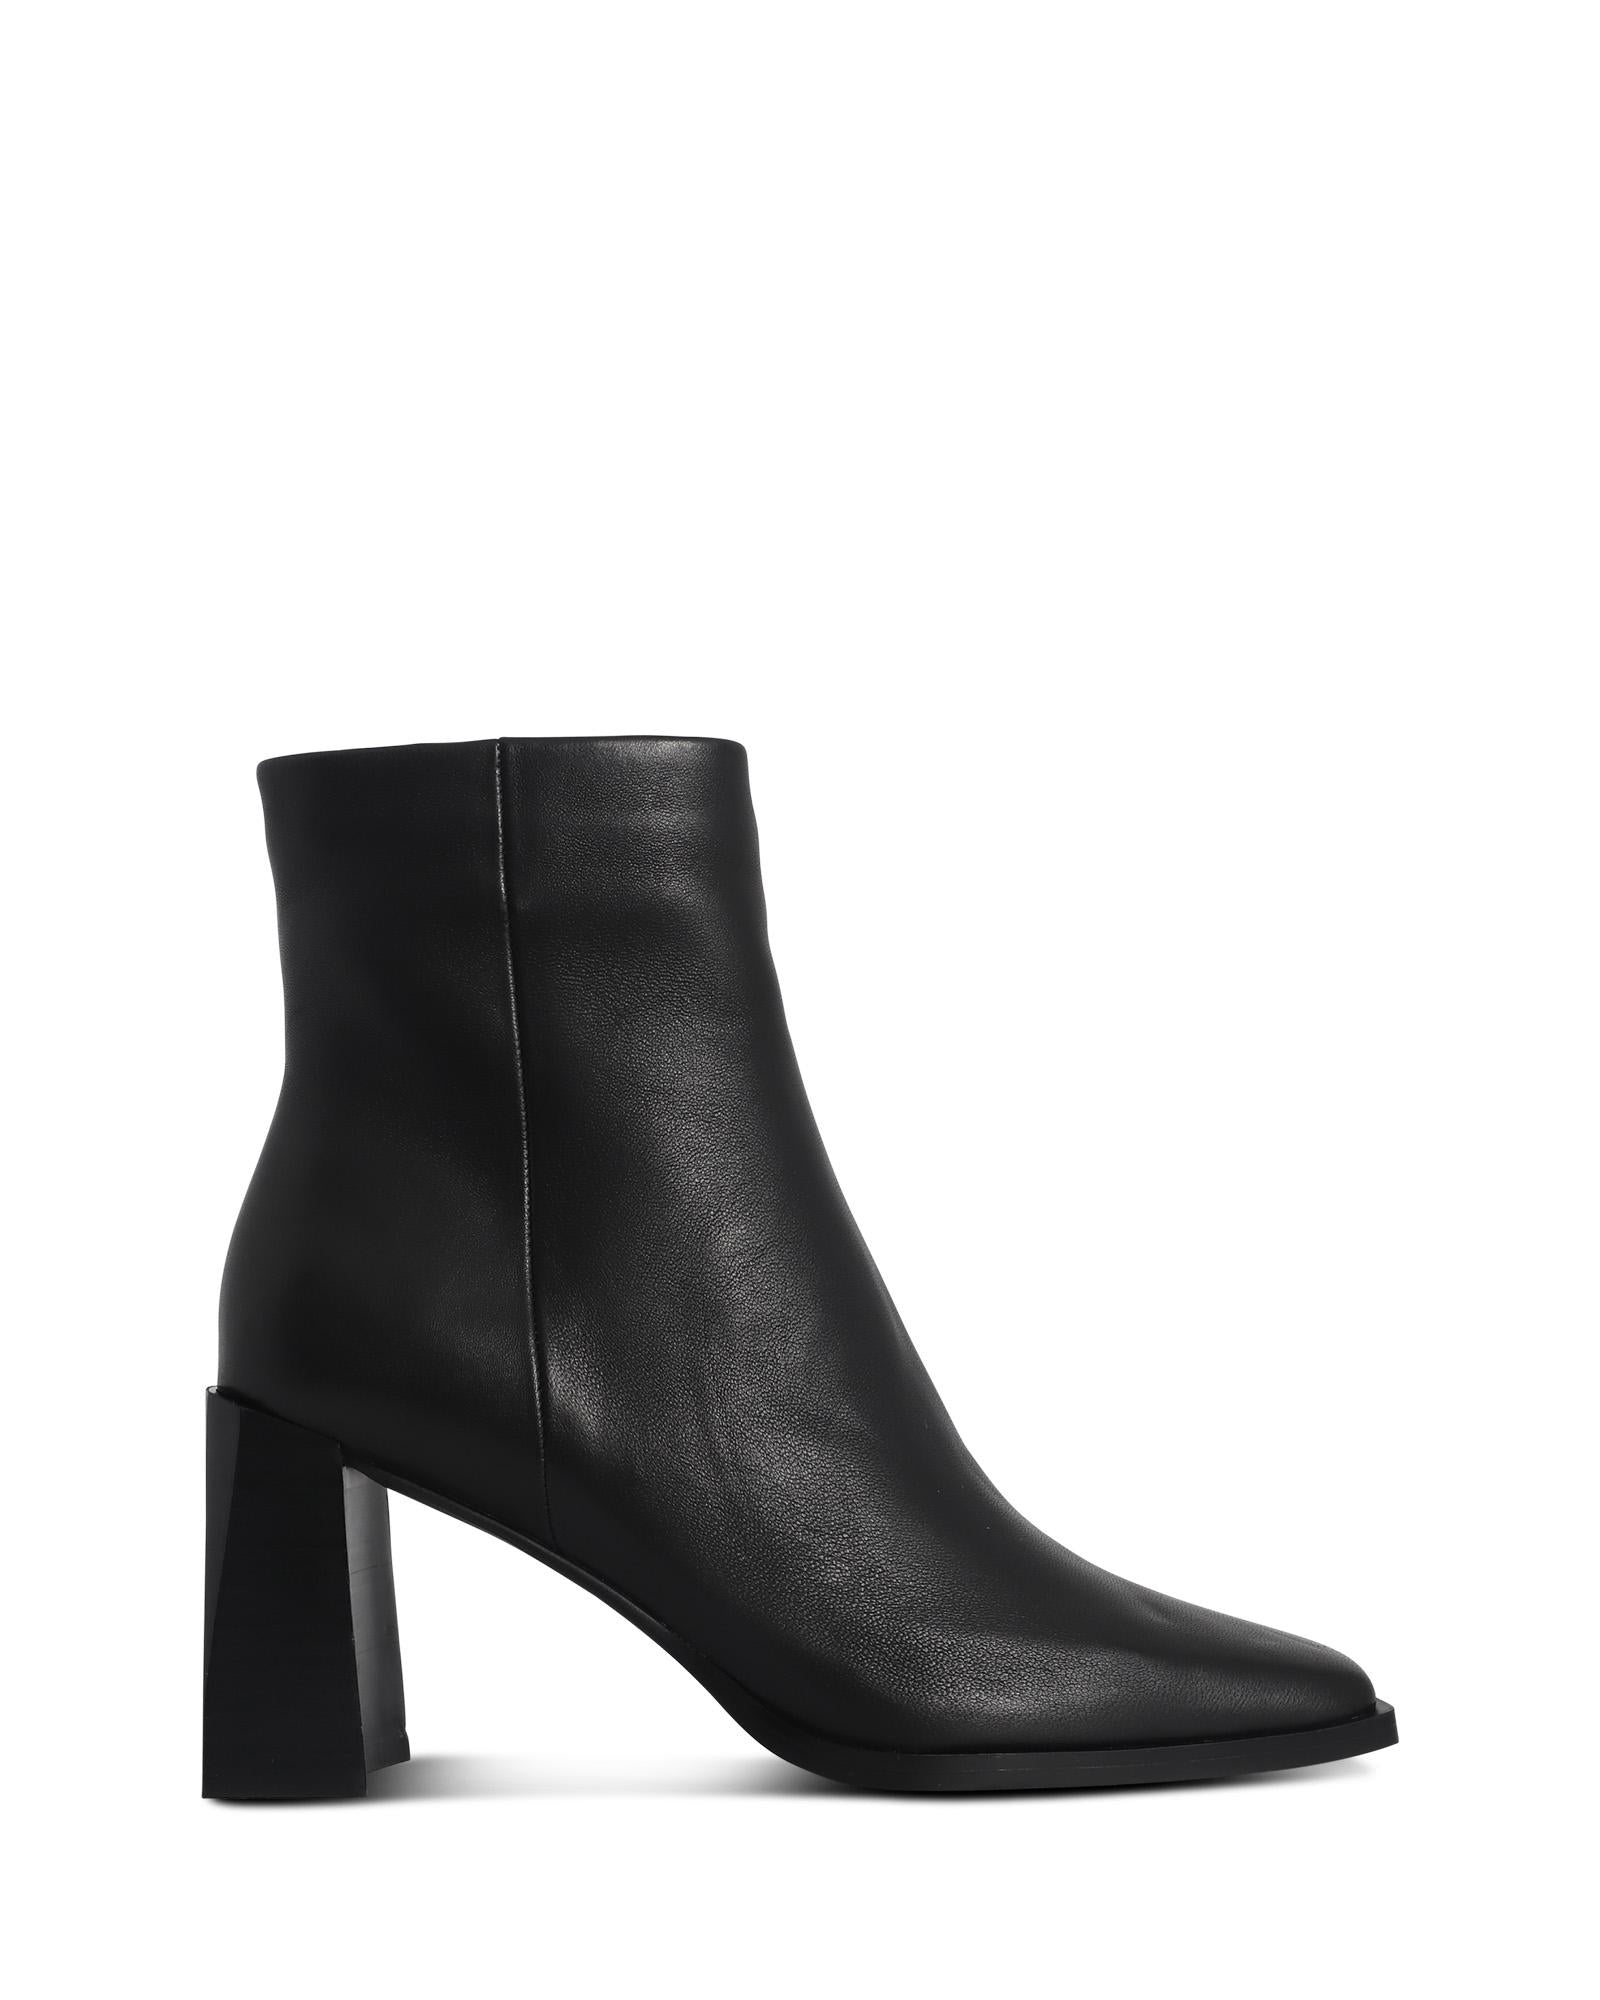 Sandiago Black 8.5cm Block Heel Ankle Boot with Square Toe 